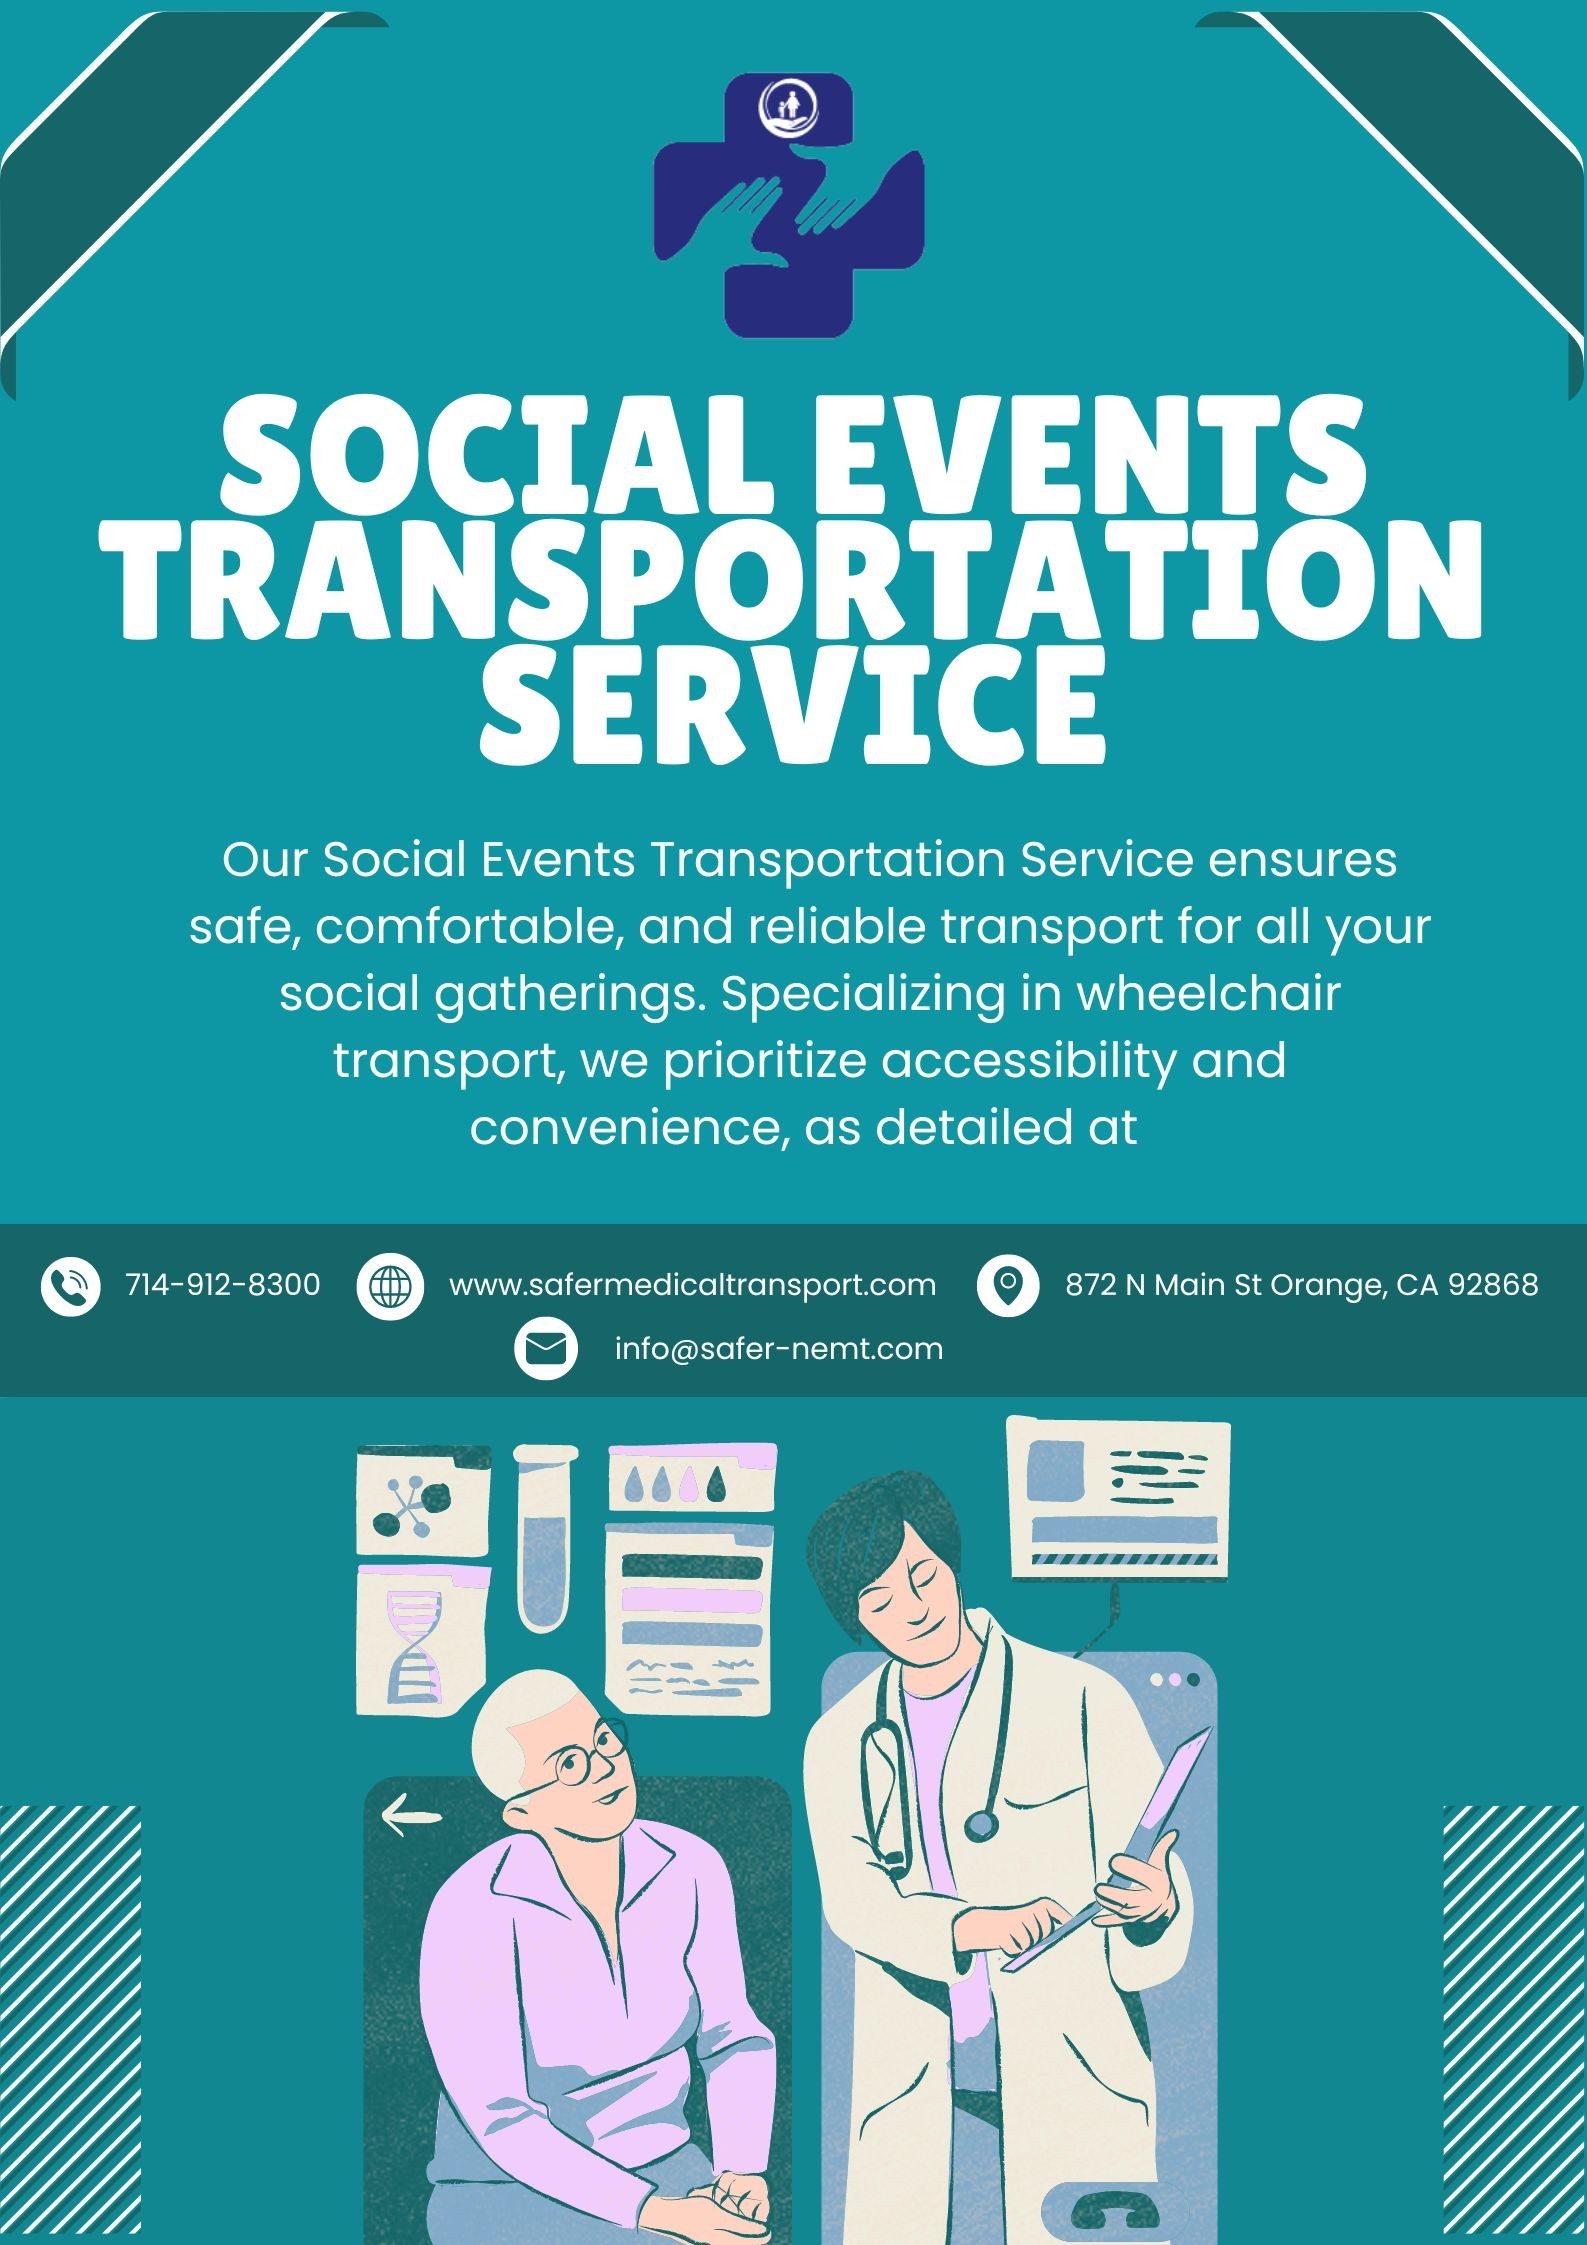 Social Events Transportation Service - www.safermedicaltransport.com